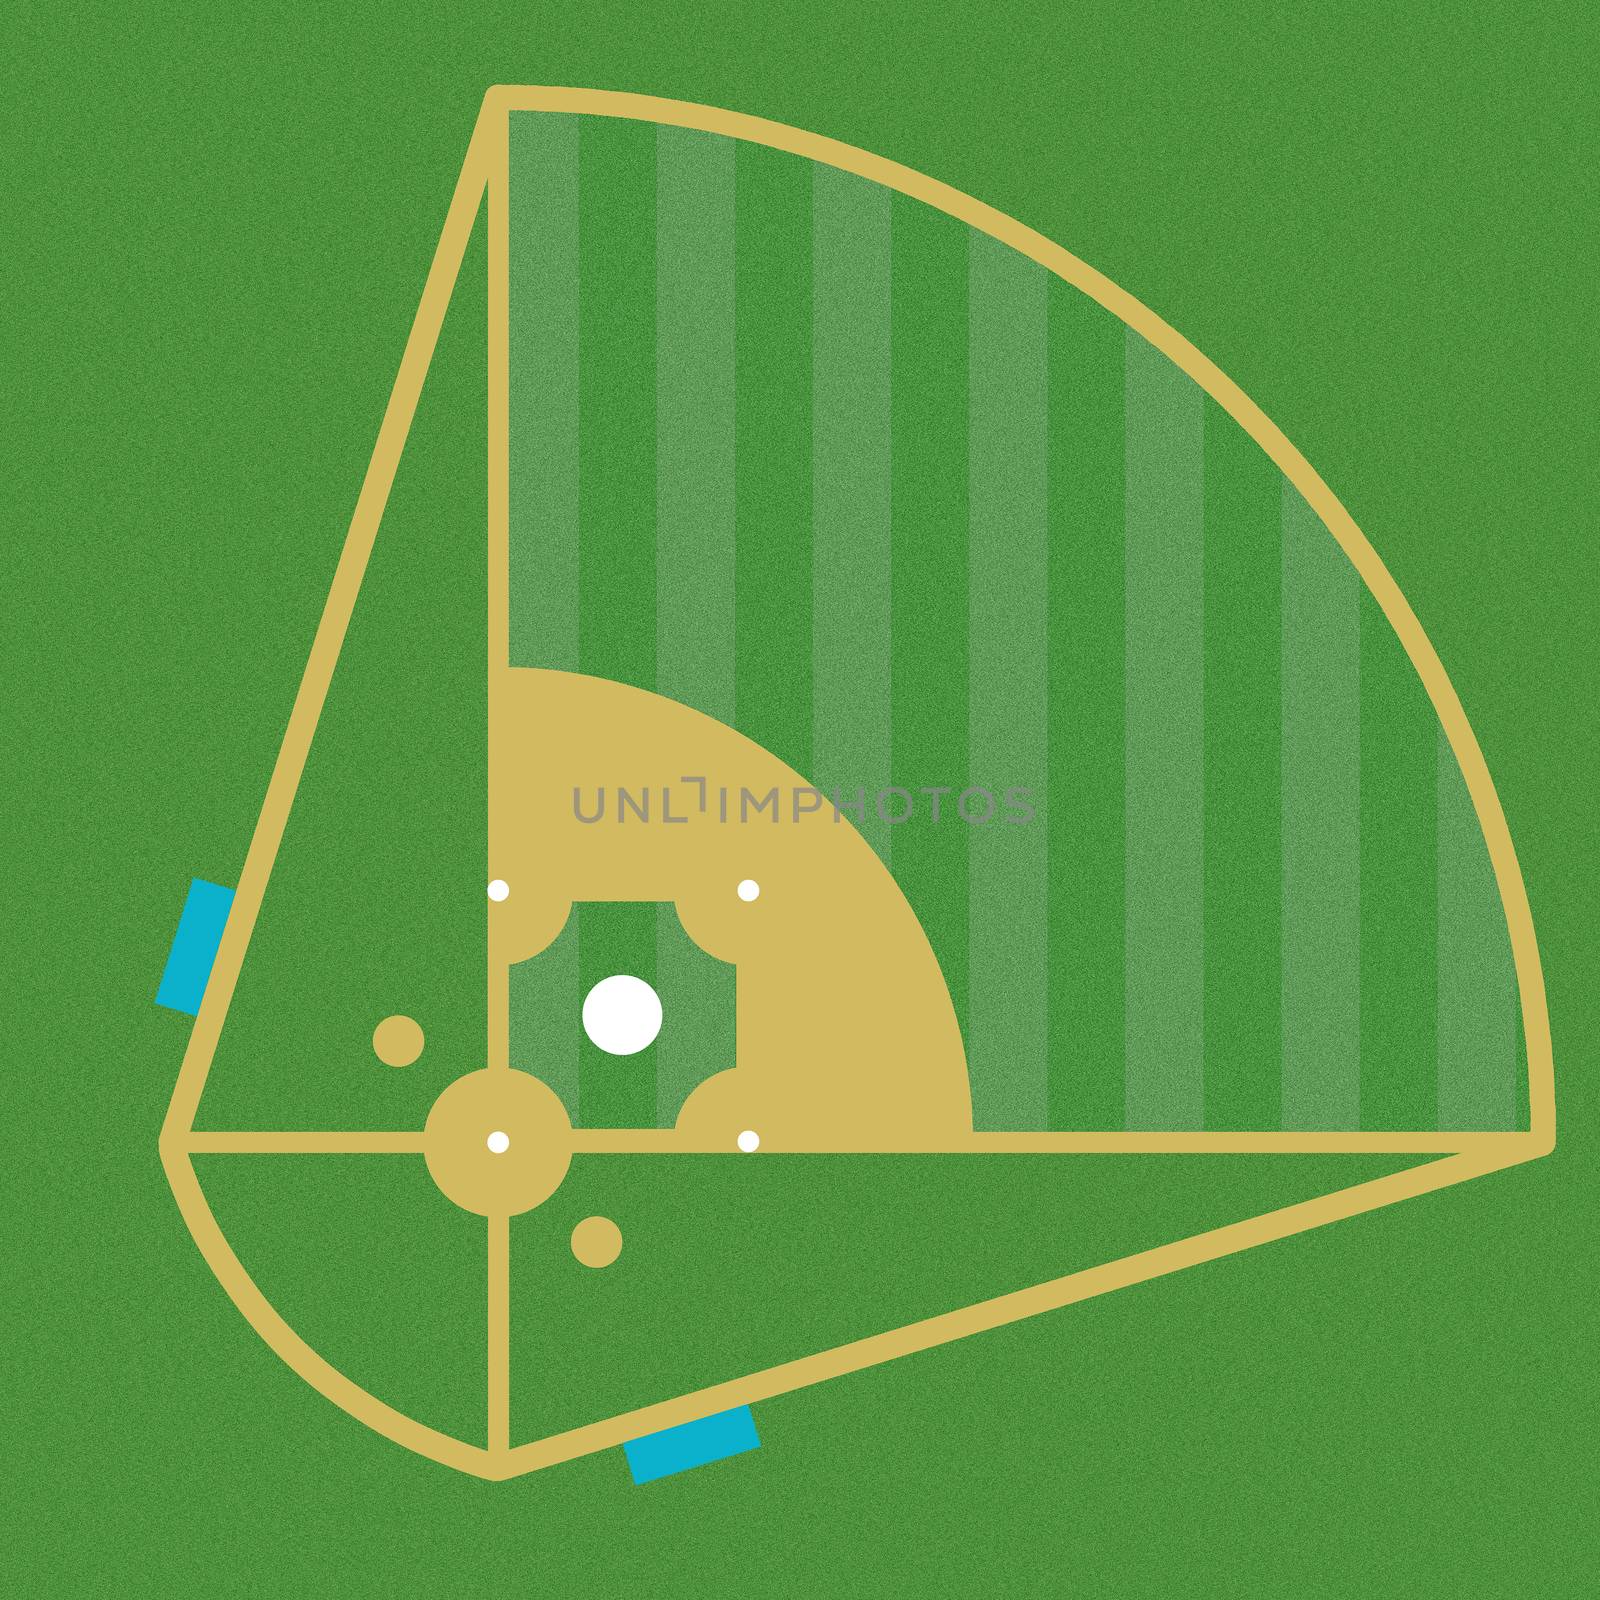 image design of the baseball field